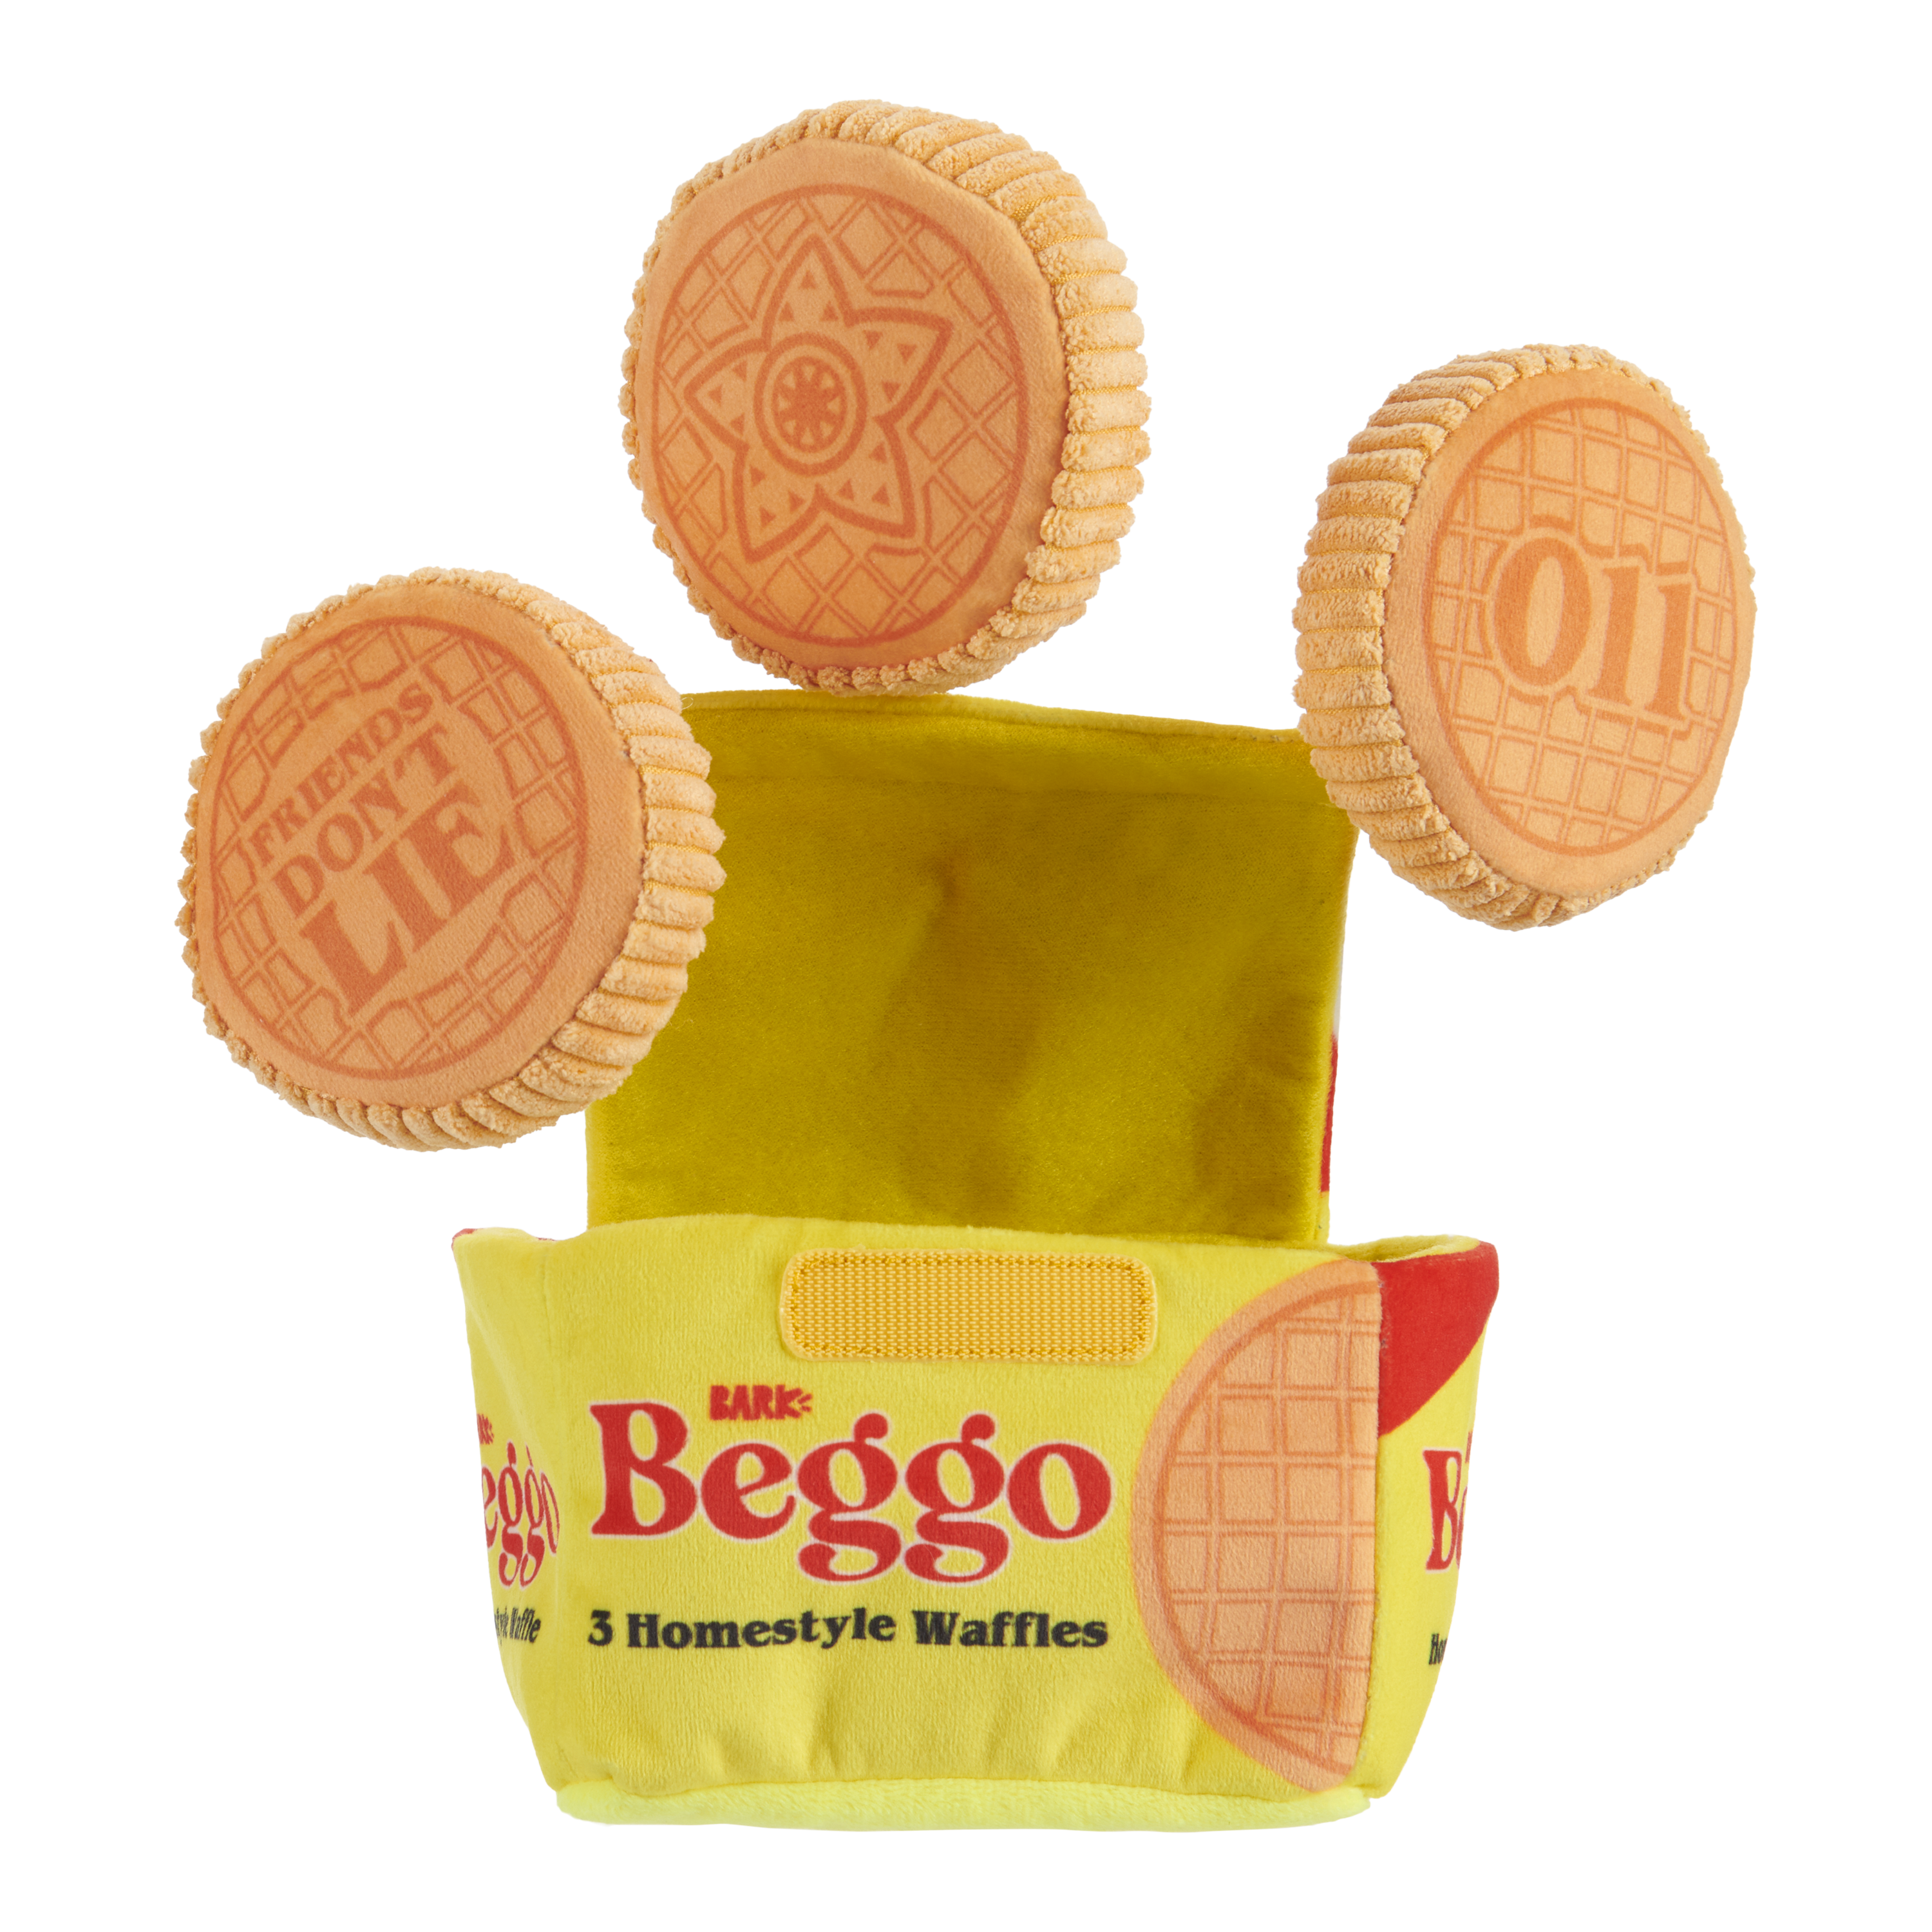 Photograph of BarkBox’s Beggo Woofles product